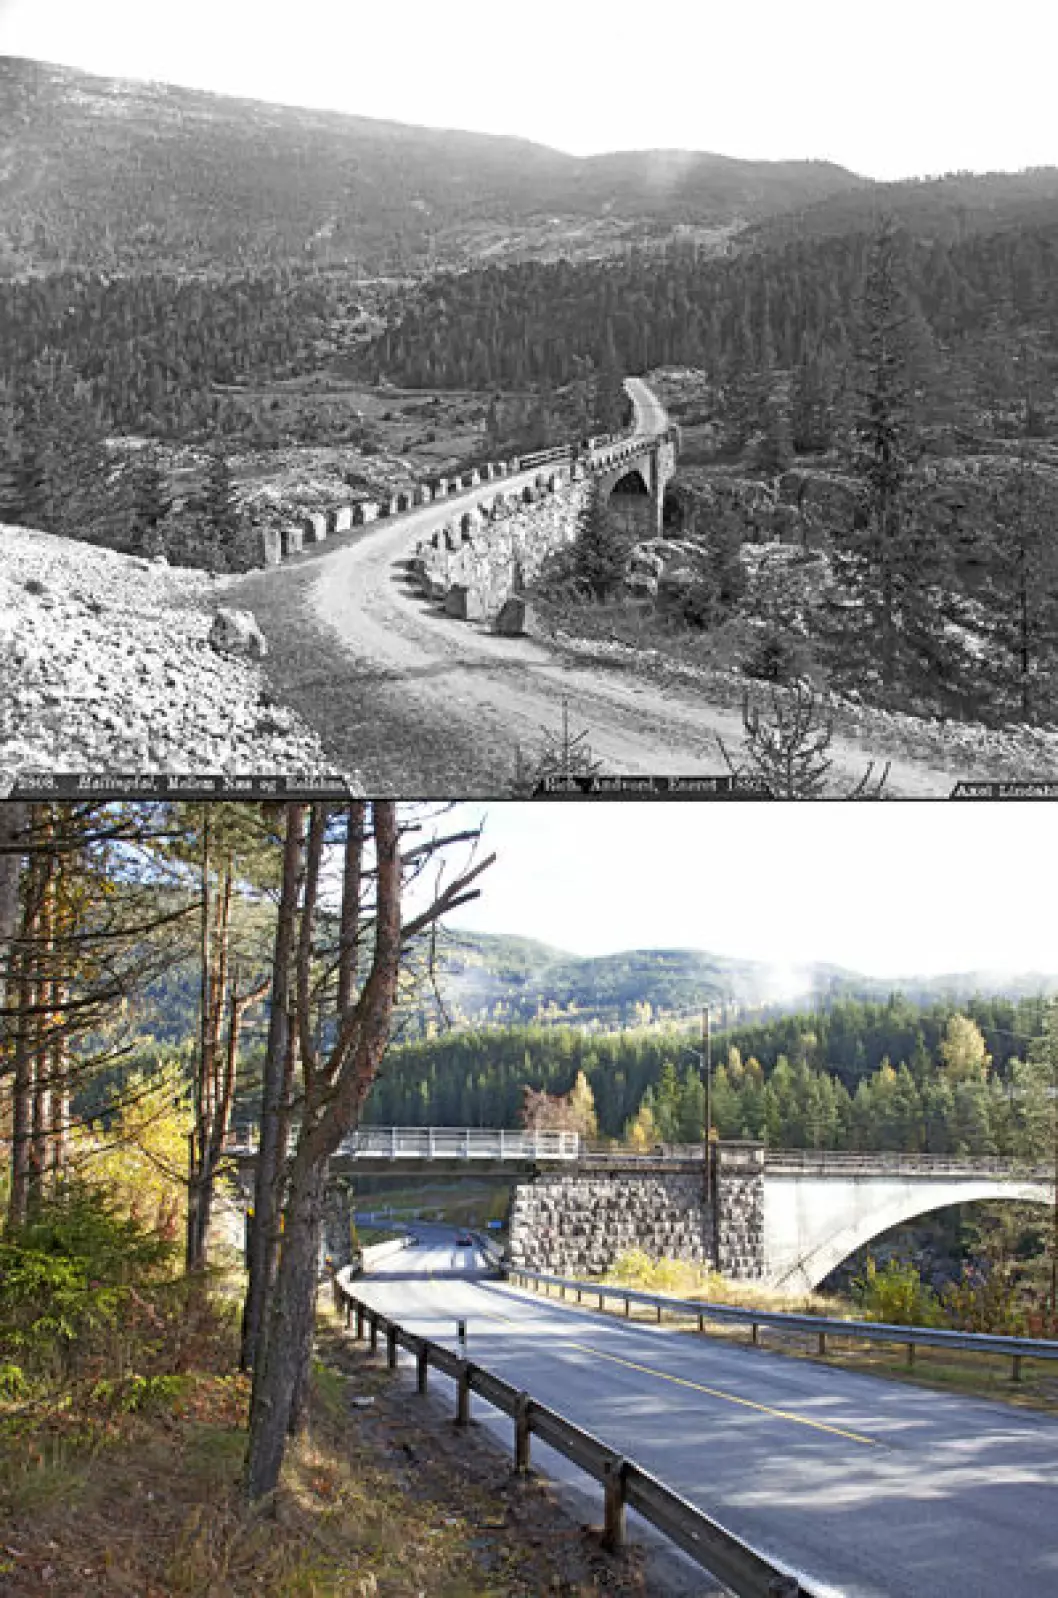 1890 og 2013: Svenkerud bro i Nes i Hallingdal, Buskerud. Foto: Axel Lindahl/Oscar Puschmann